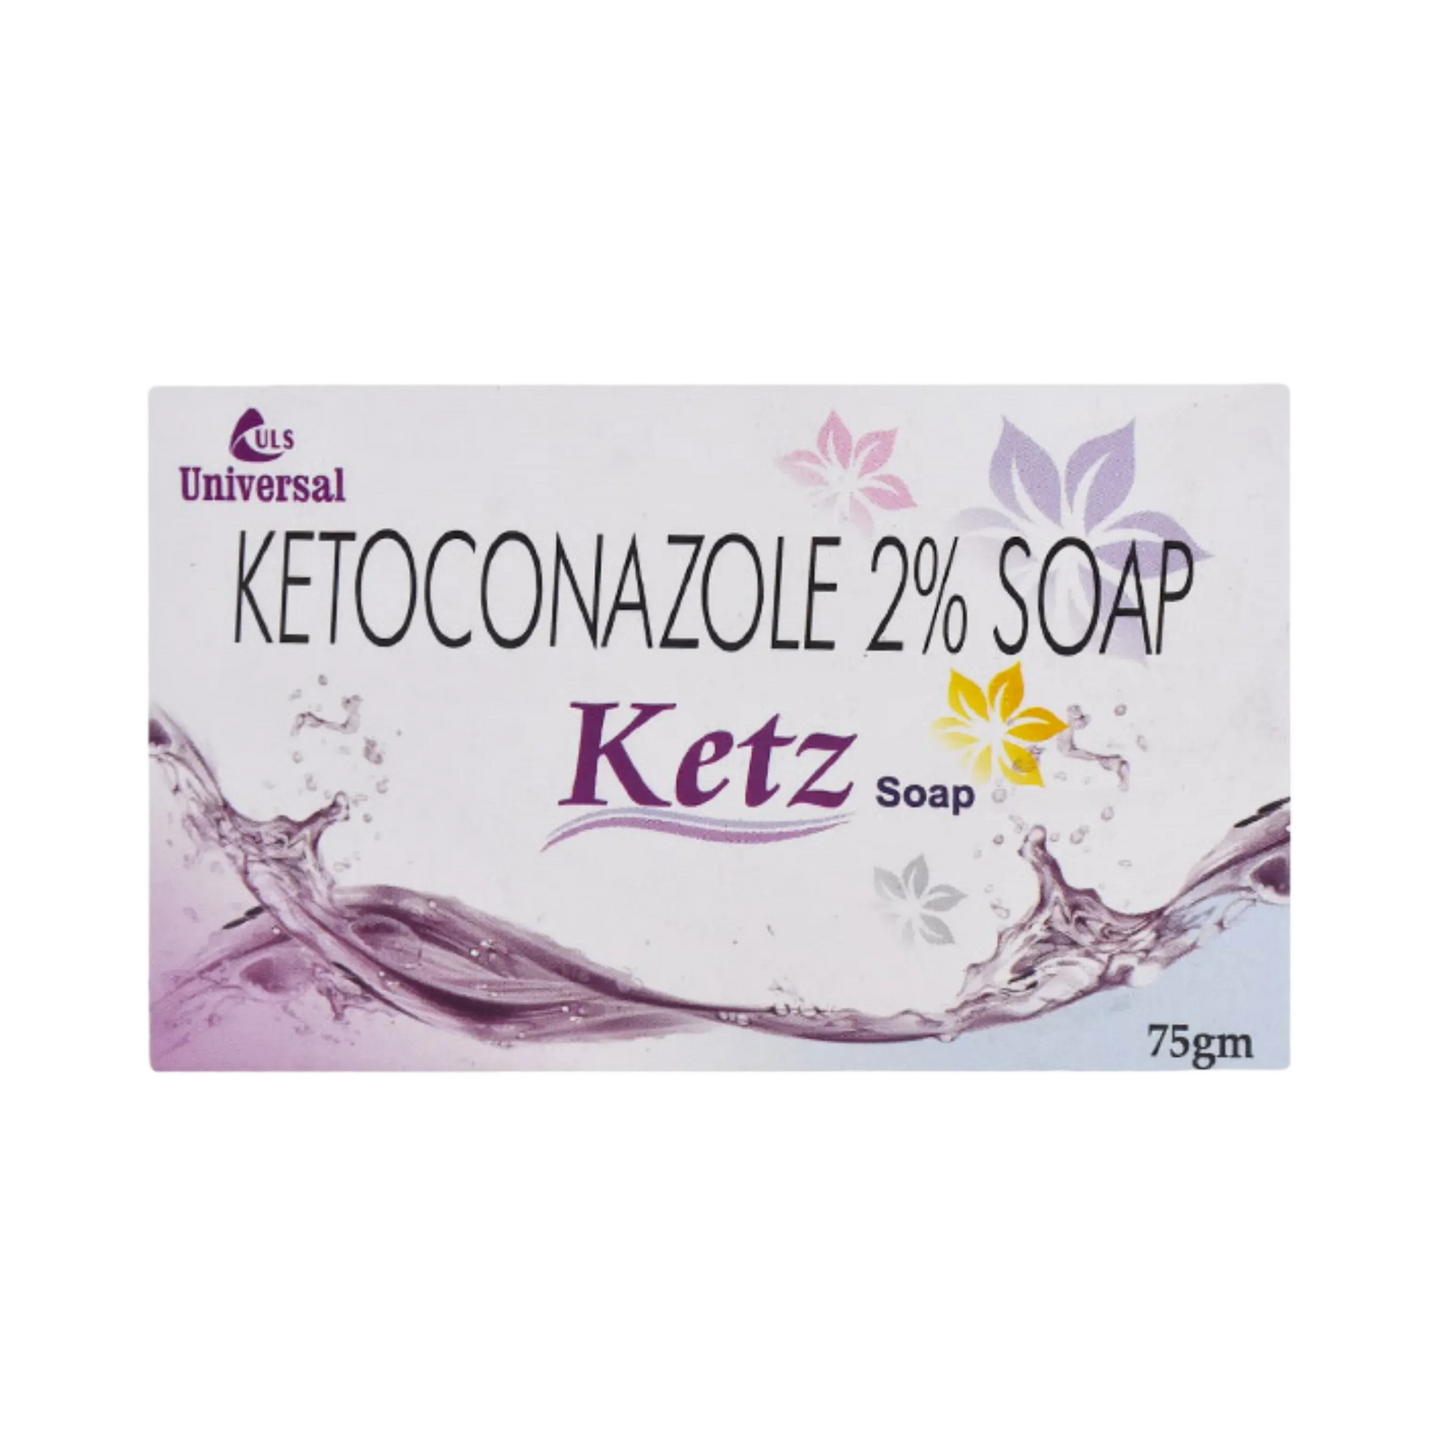 KETZ SOAP 75GM